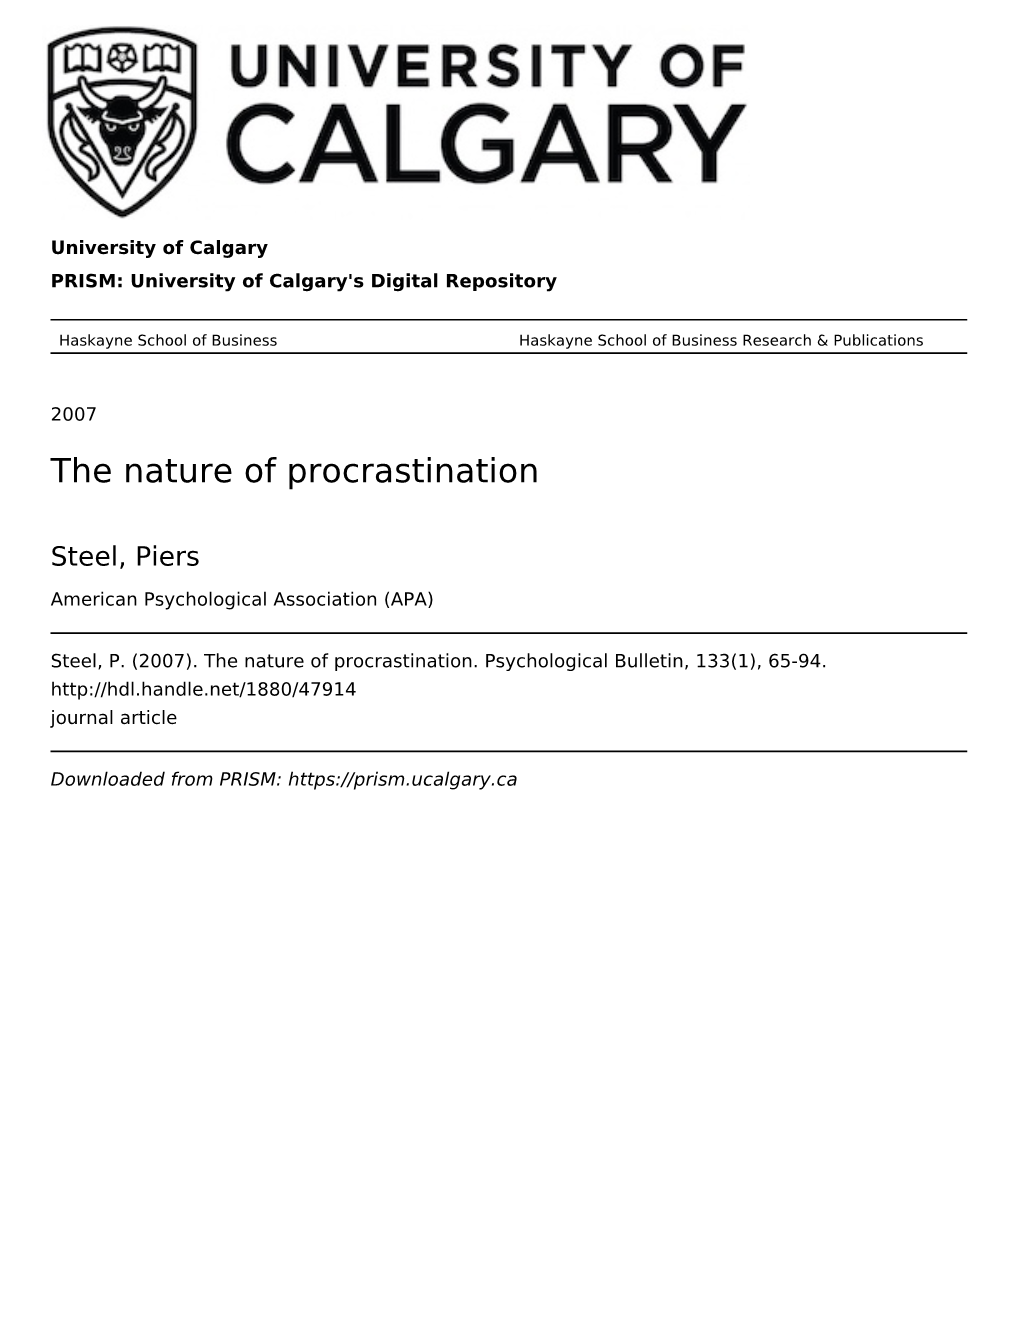 The Nature of Procrastination